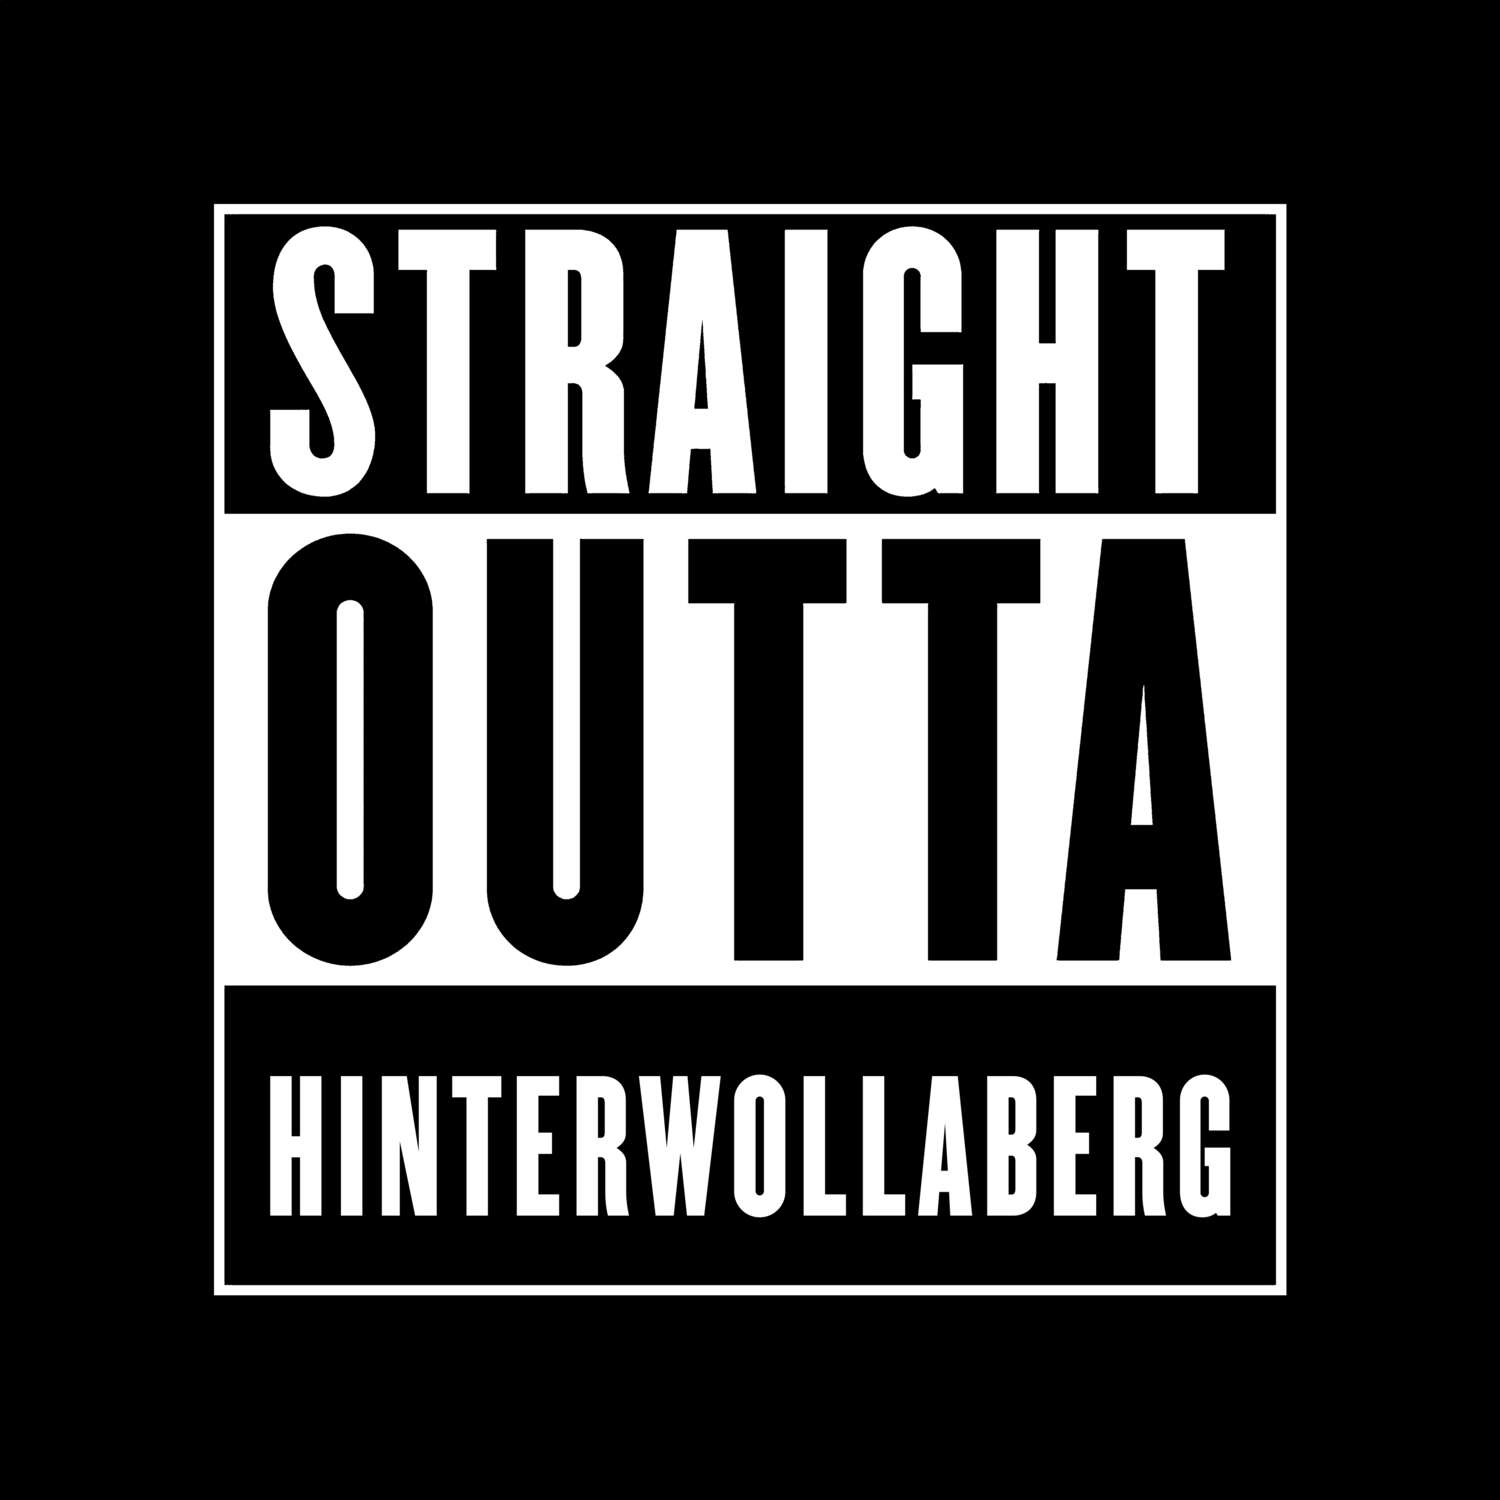 Hinterwollaberg T-Shirt »Straight Outta«